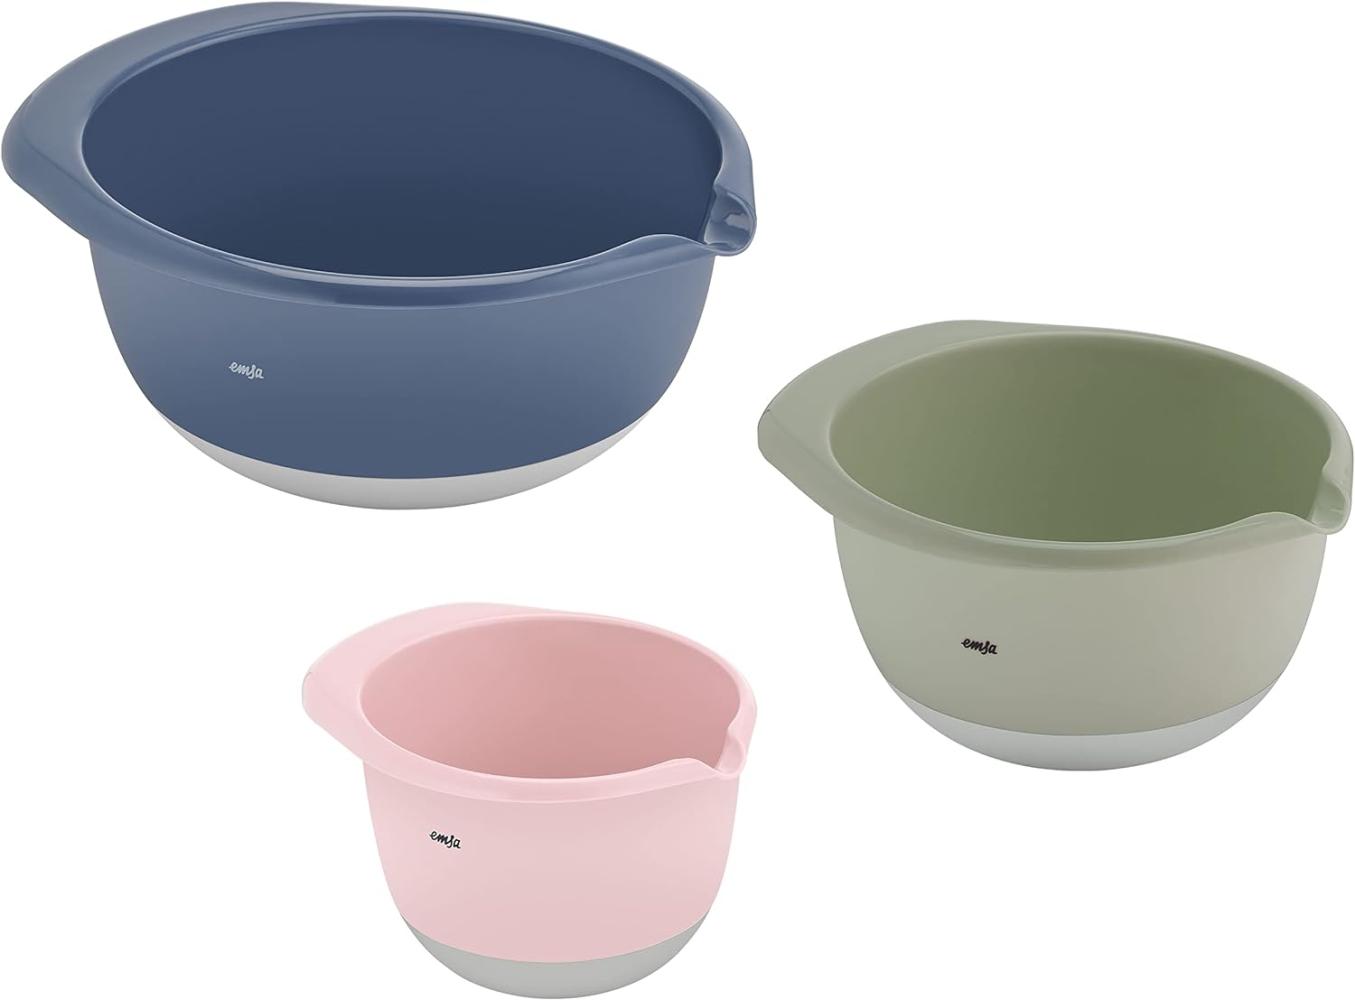 Emsa Prep&Bake 3-teiliges Rührschüssel-Set aus Kunststoff | 1,4 + 2,8 + 4,7 Liter | Rutschfester Boden | Stapelbar | Rosa, Grün, Blau Bild 1